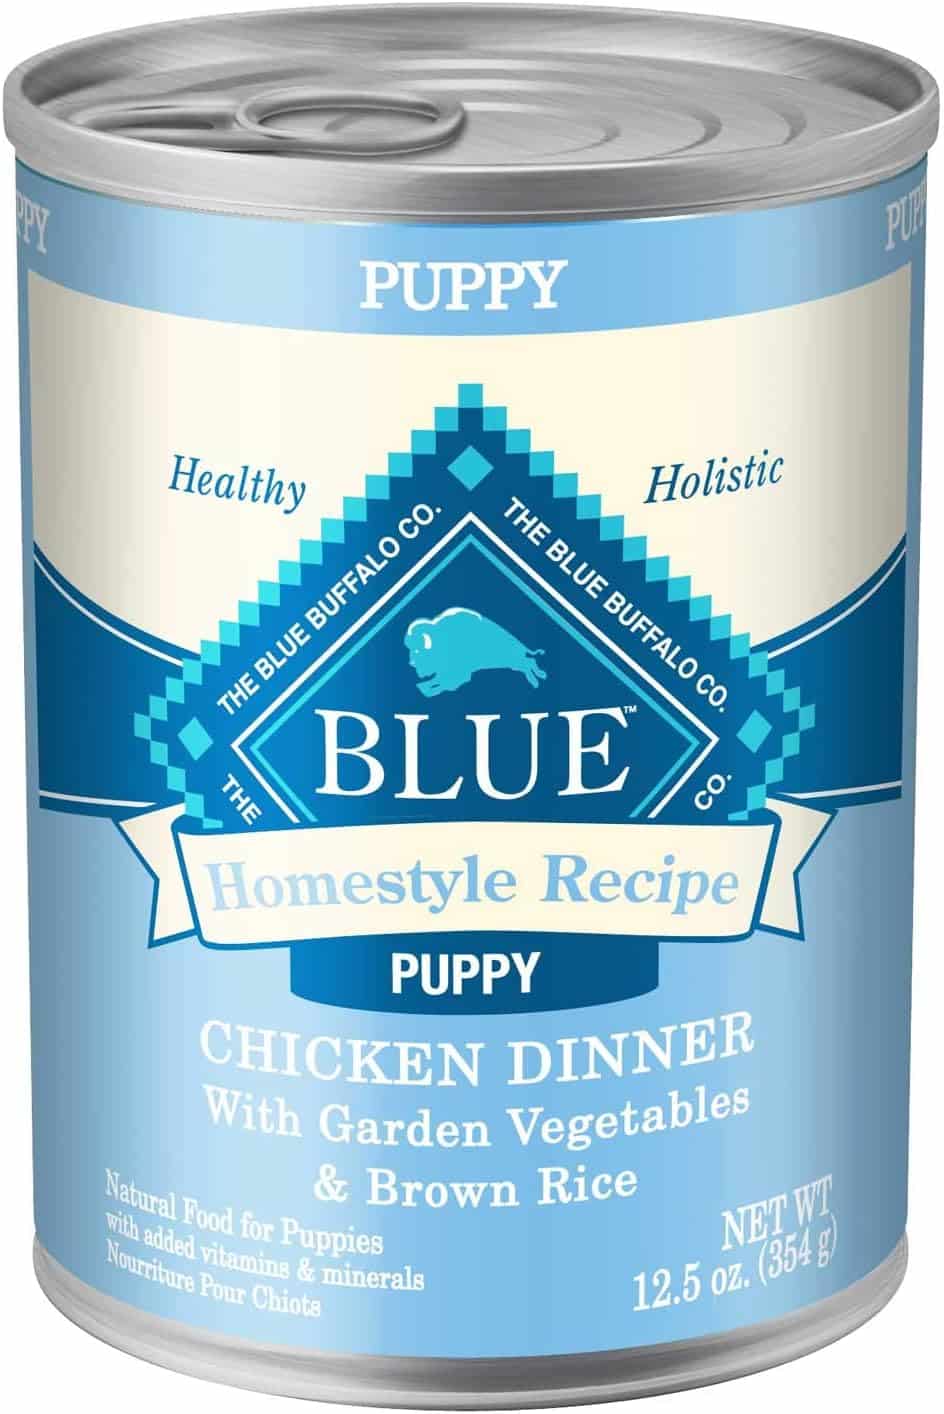 blue buffalo homestyle puppy recipe can